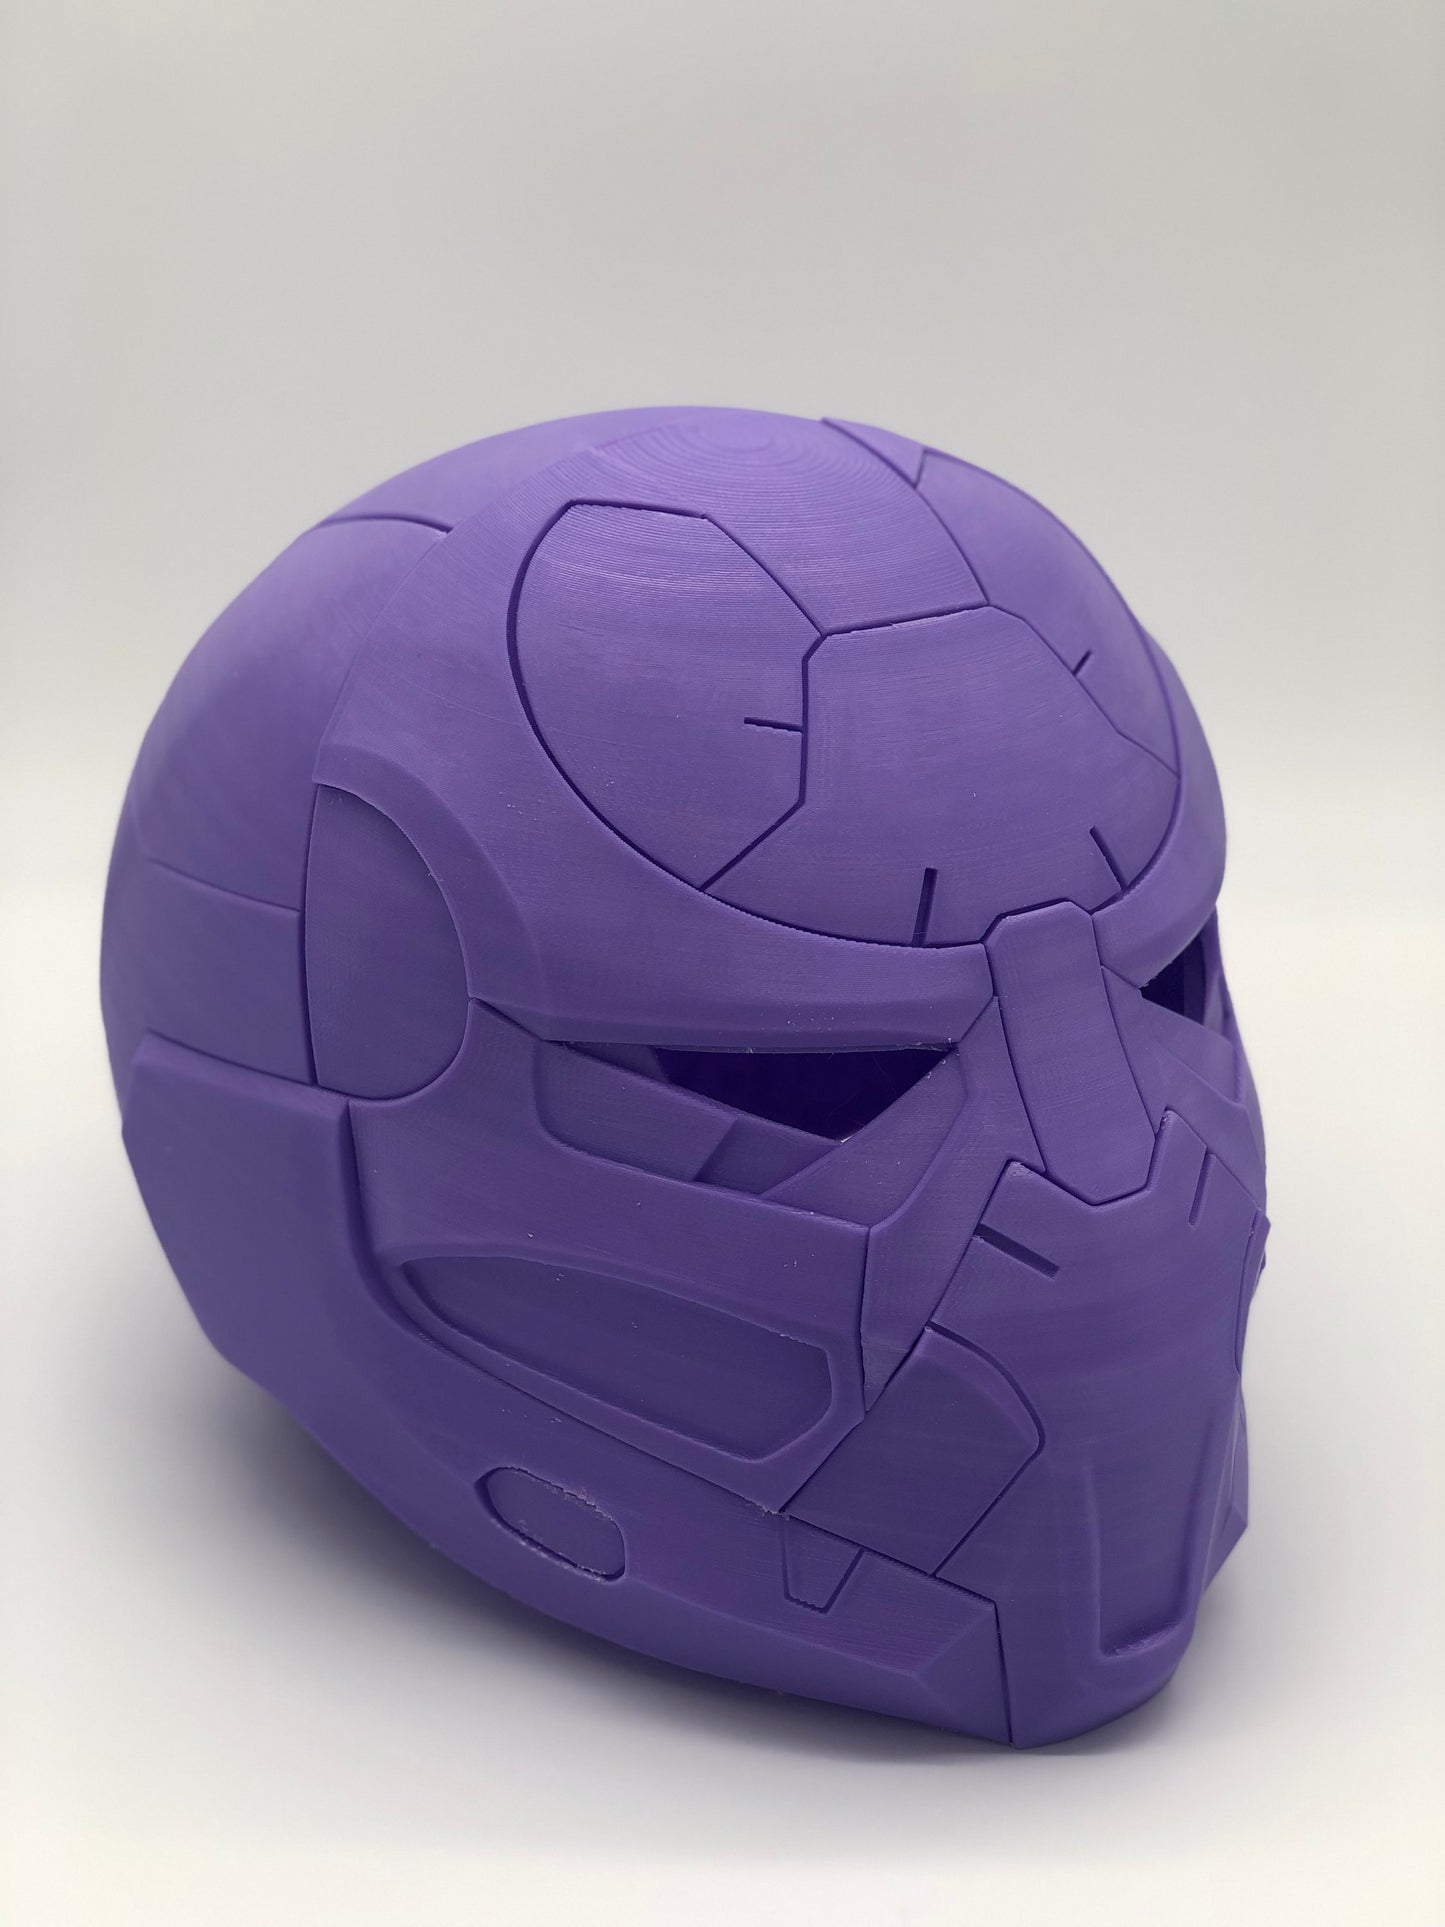 Prowler helmet wearable from Spiderman PS5